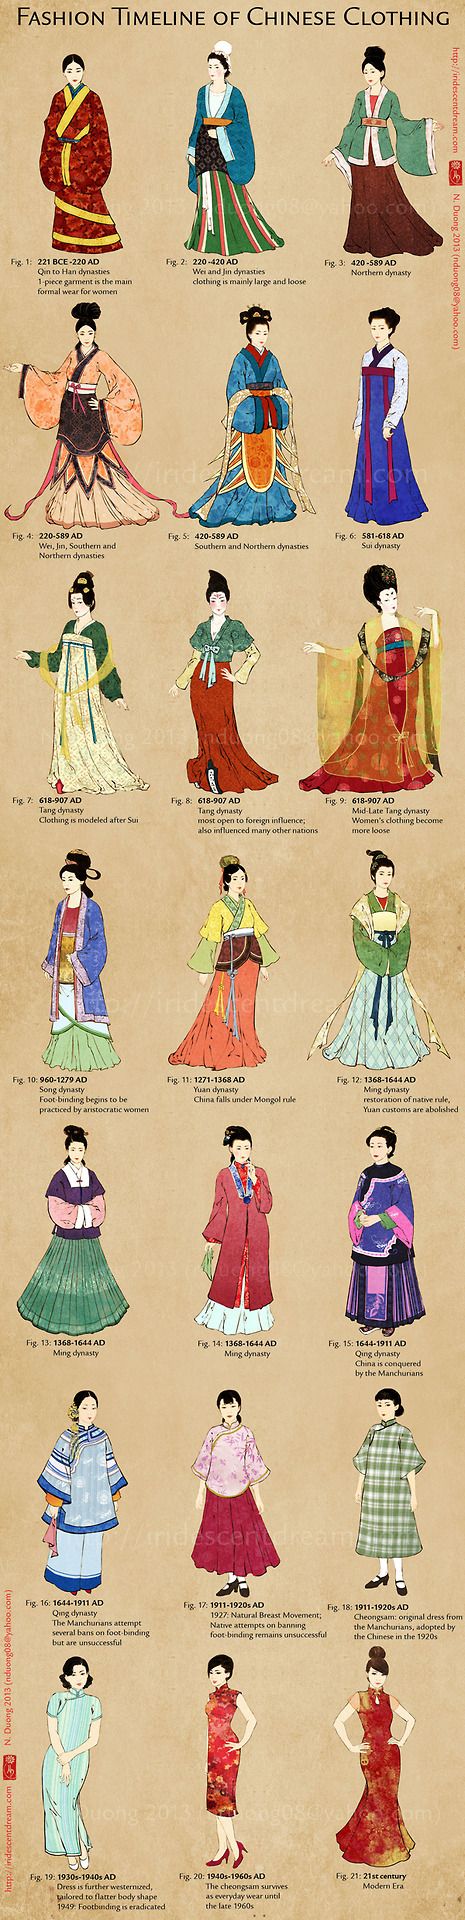 Asian History, Istoria Modei, Sejarah Kuno, Fashion Timeline, Mode Tips, Chinese History, Chinese Clothing, Ancient China, Chinese Dress